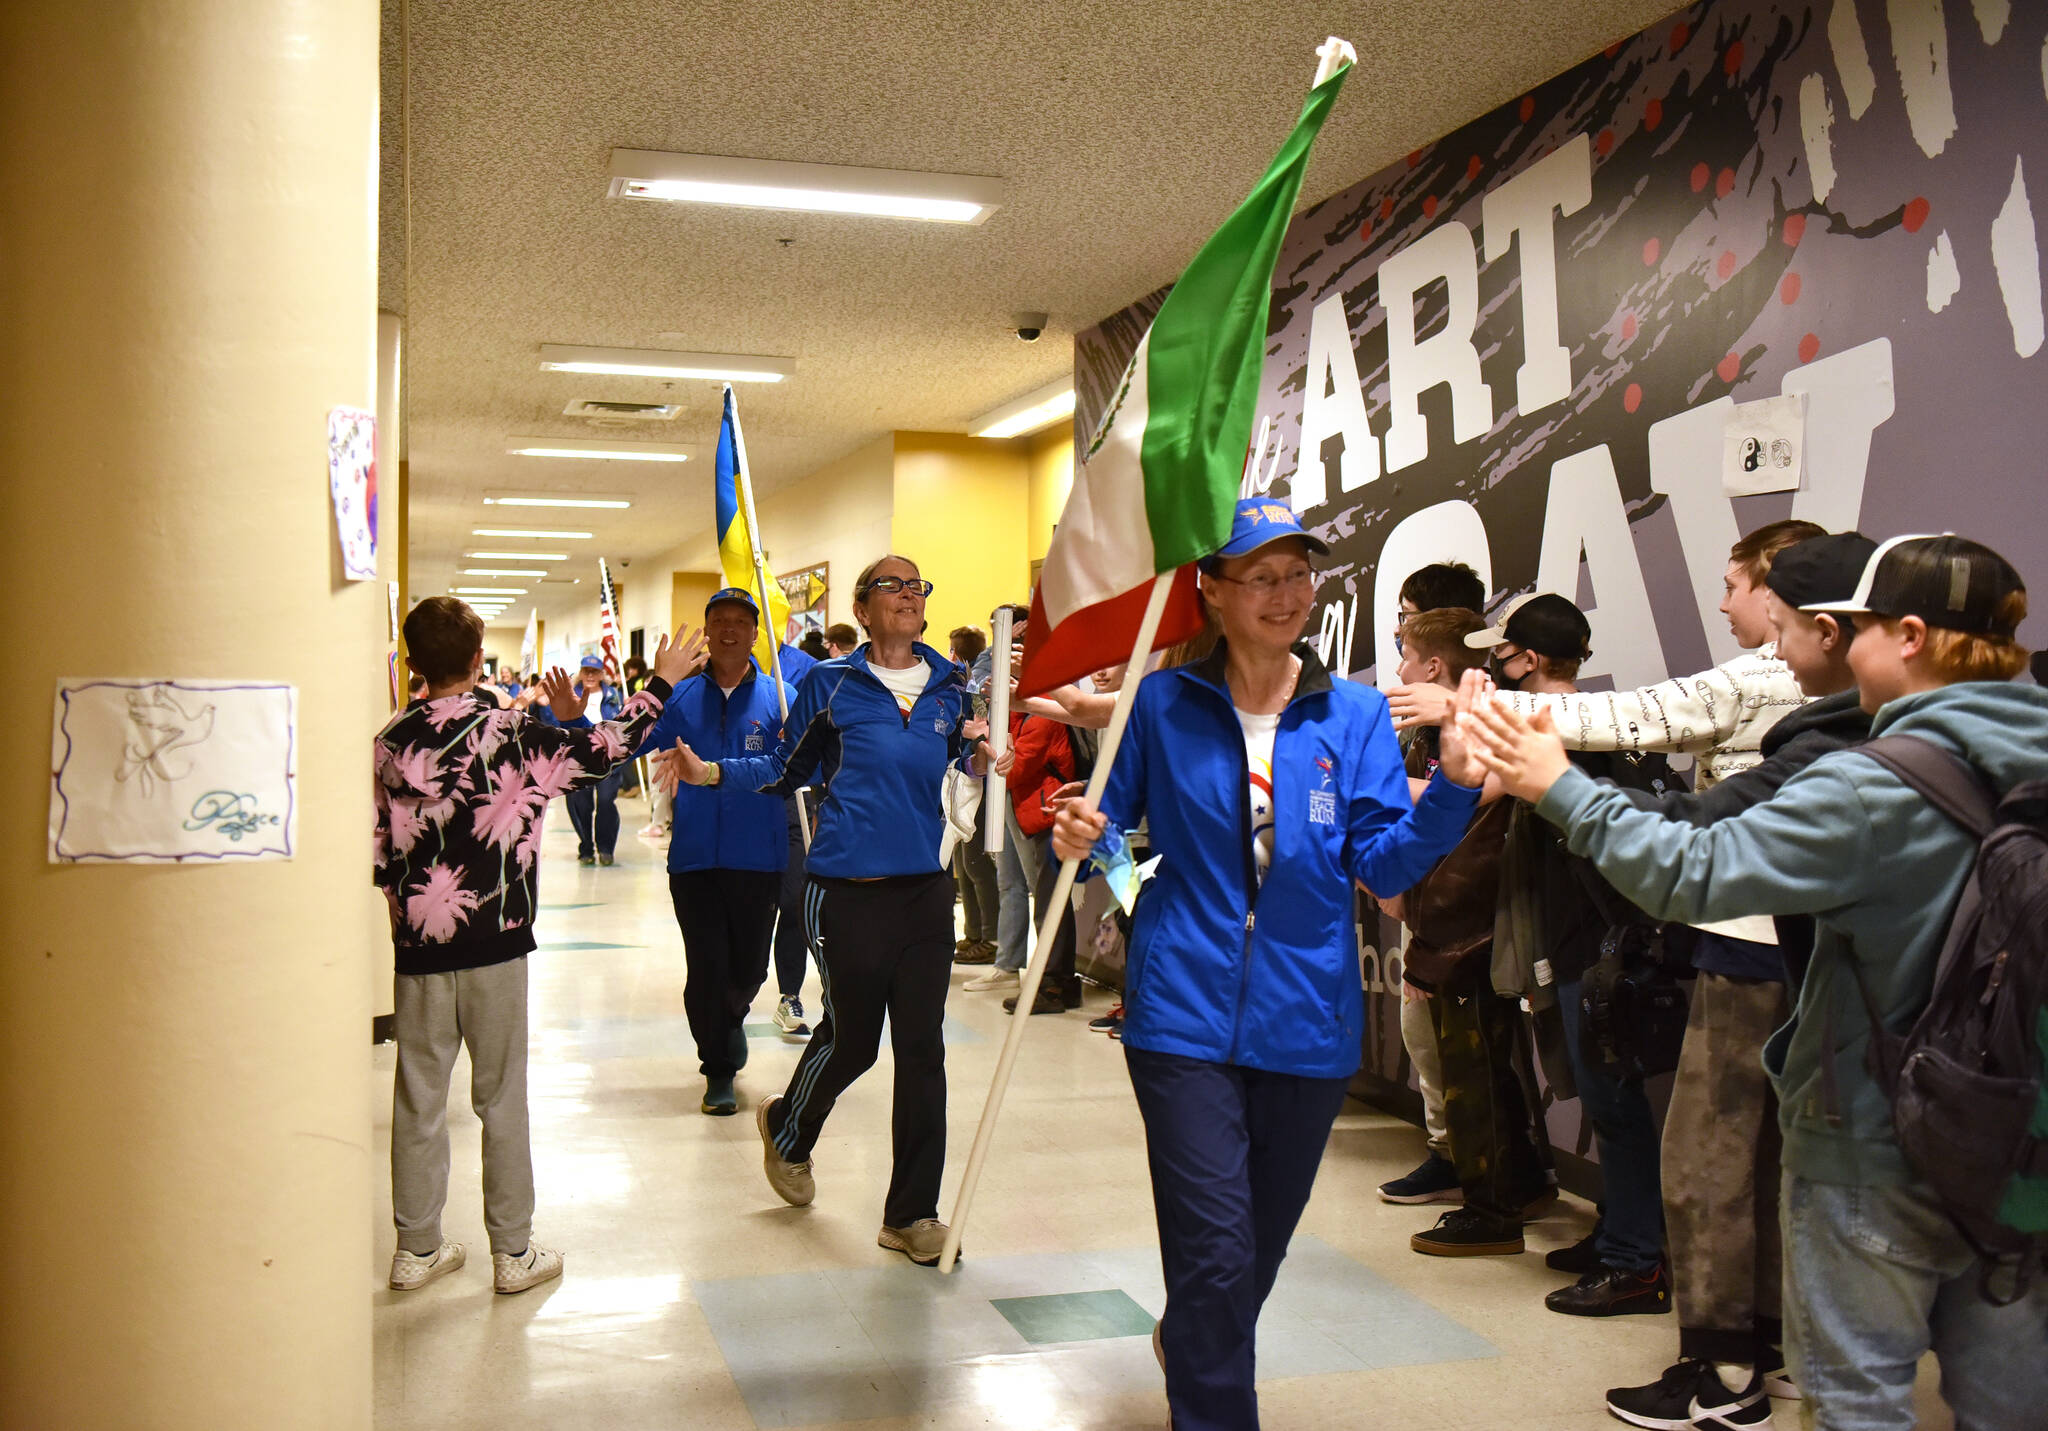 Peace Run team members run through the halls of Kingston Middle School.